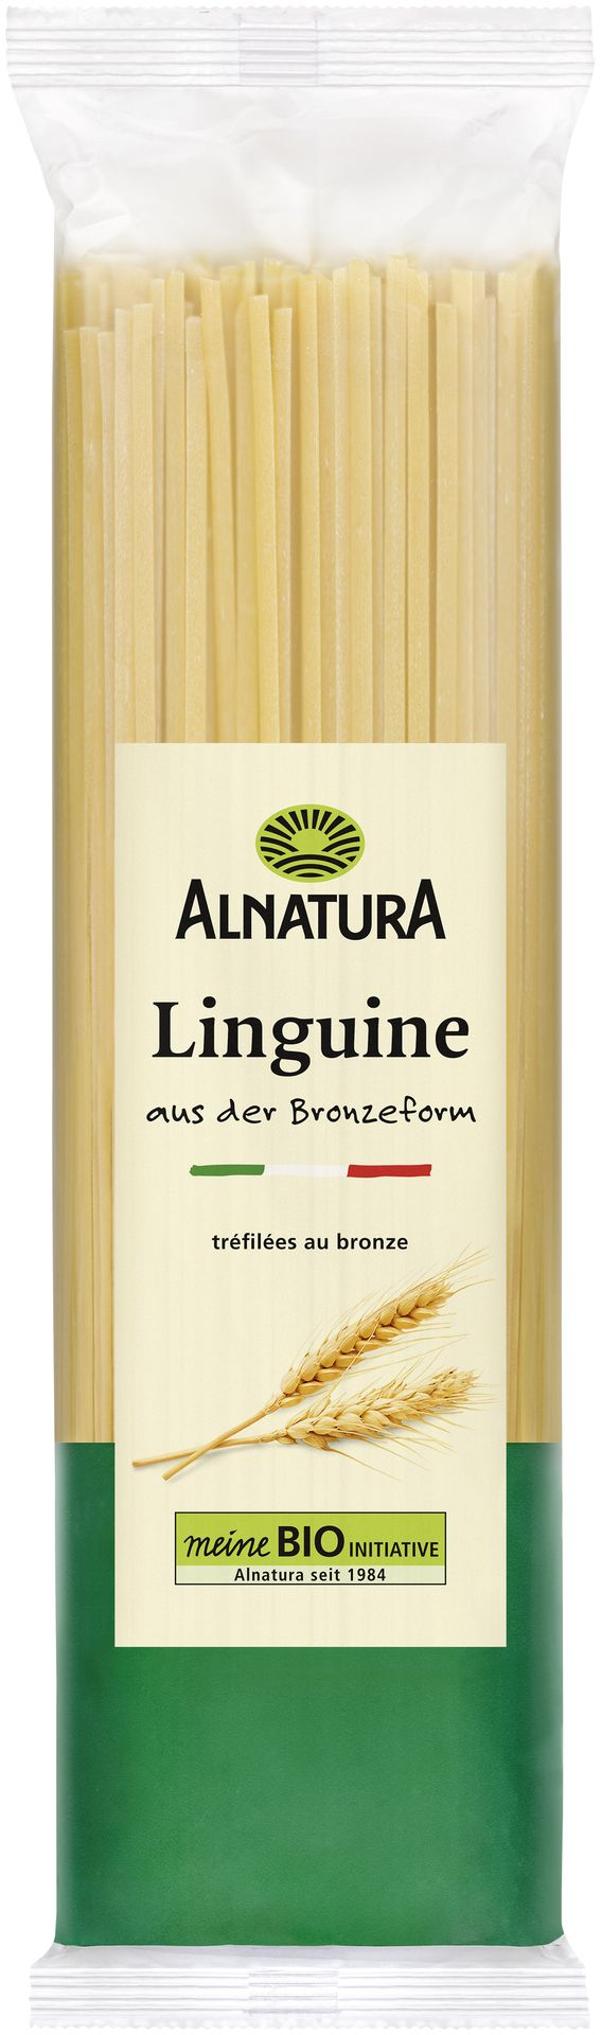 Produktfoto zu Linguine 500g Alnatura